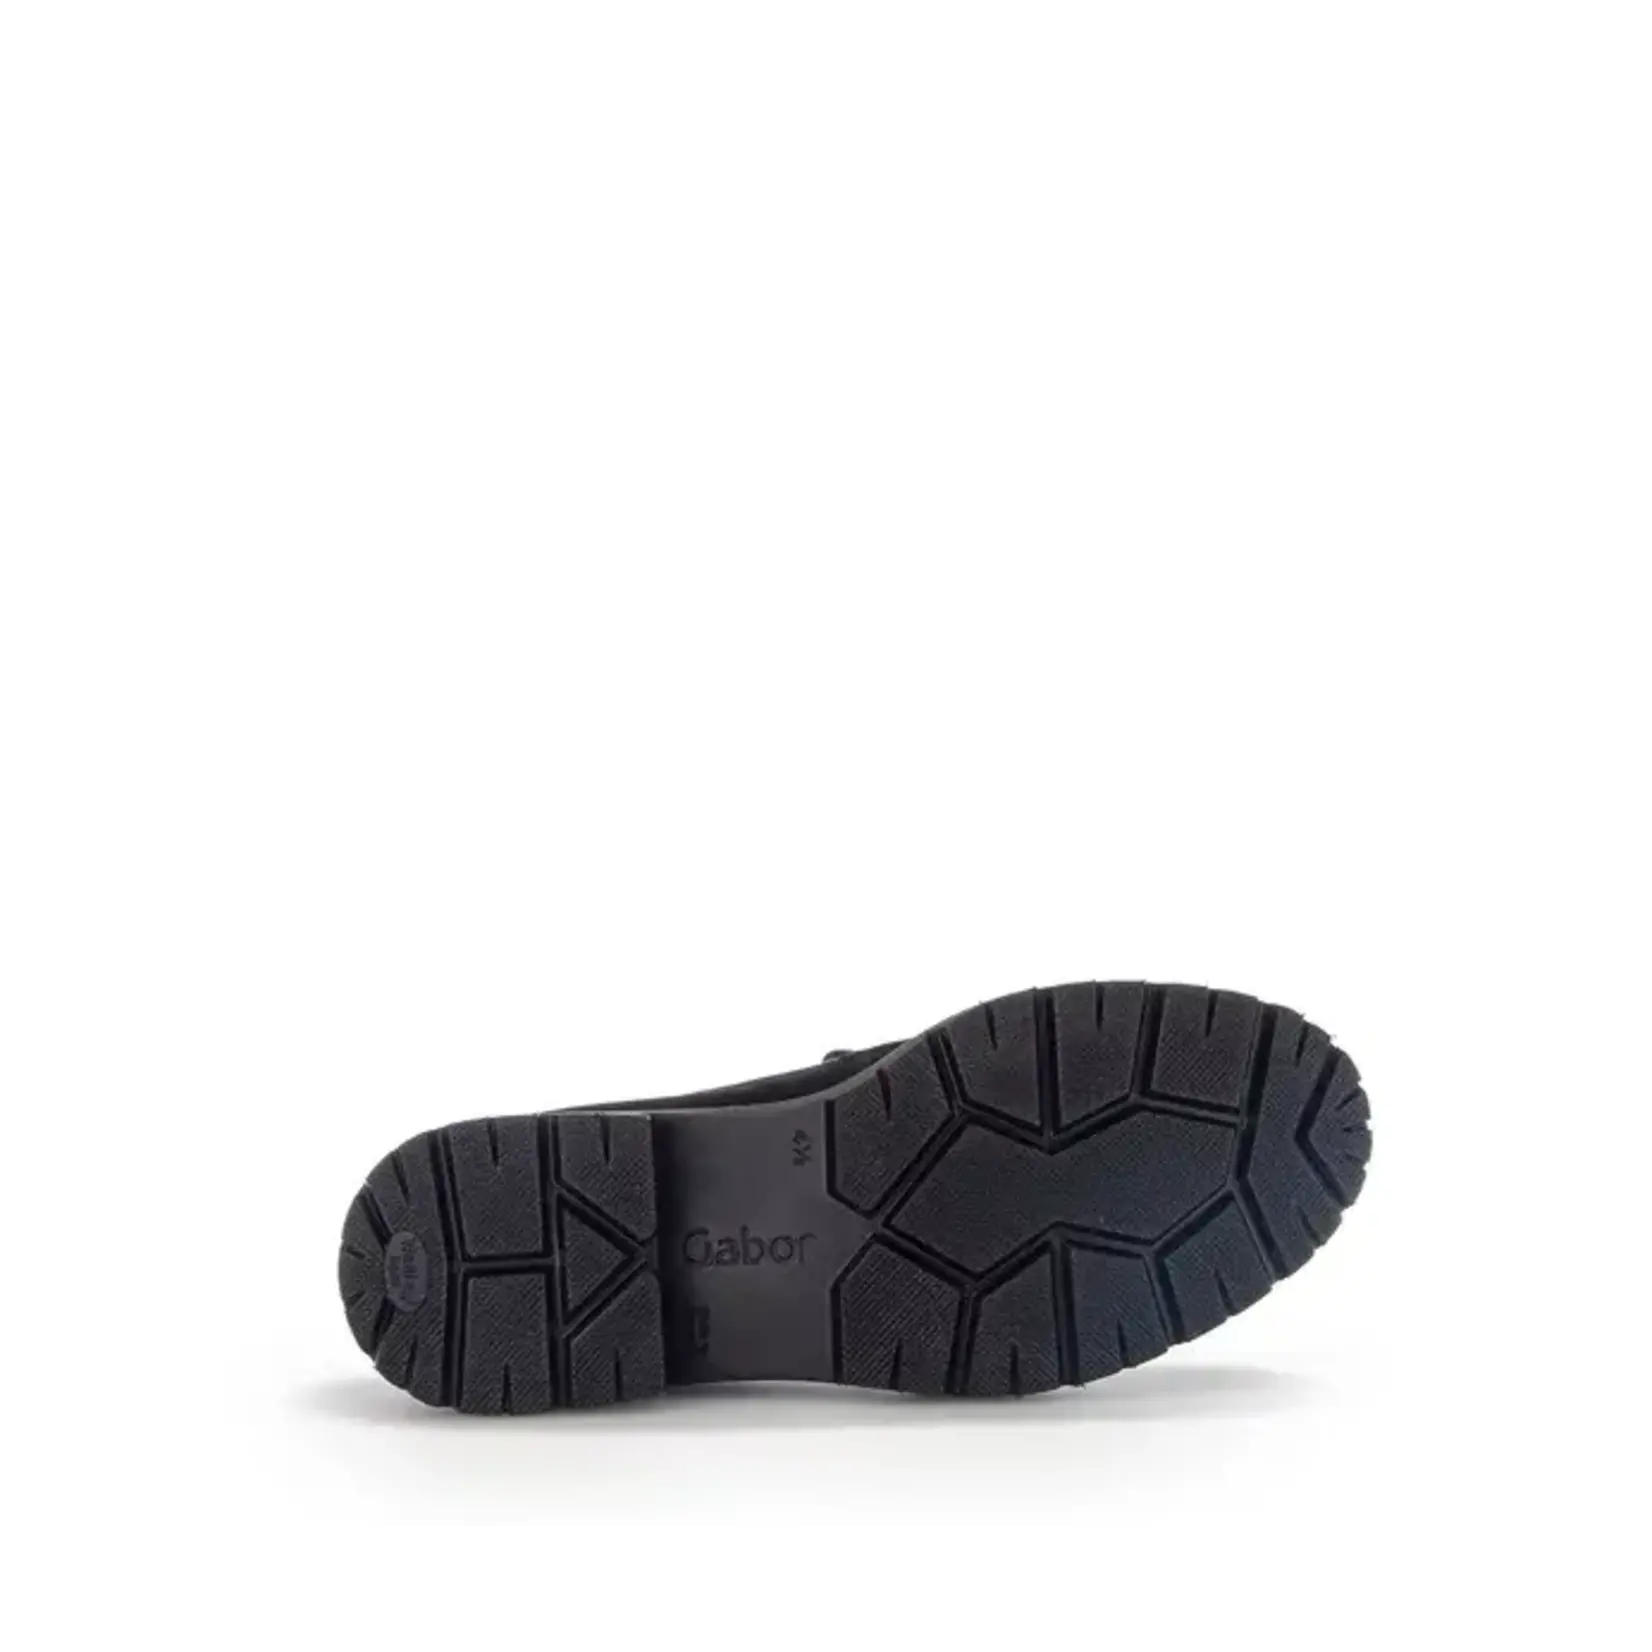 Gabor Chunky Black Nubuck Loafer By Gabor 35.233.17